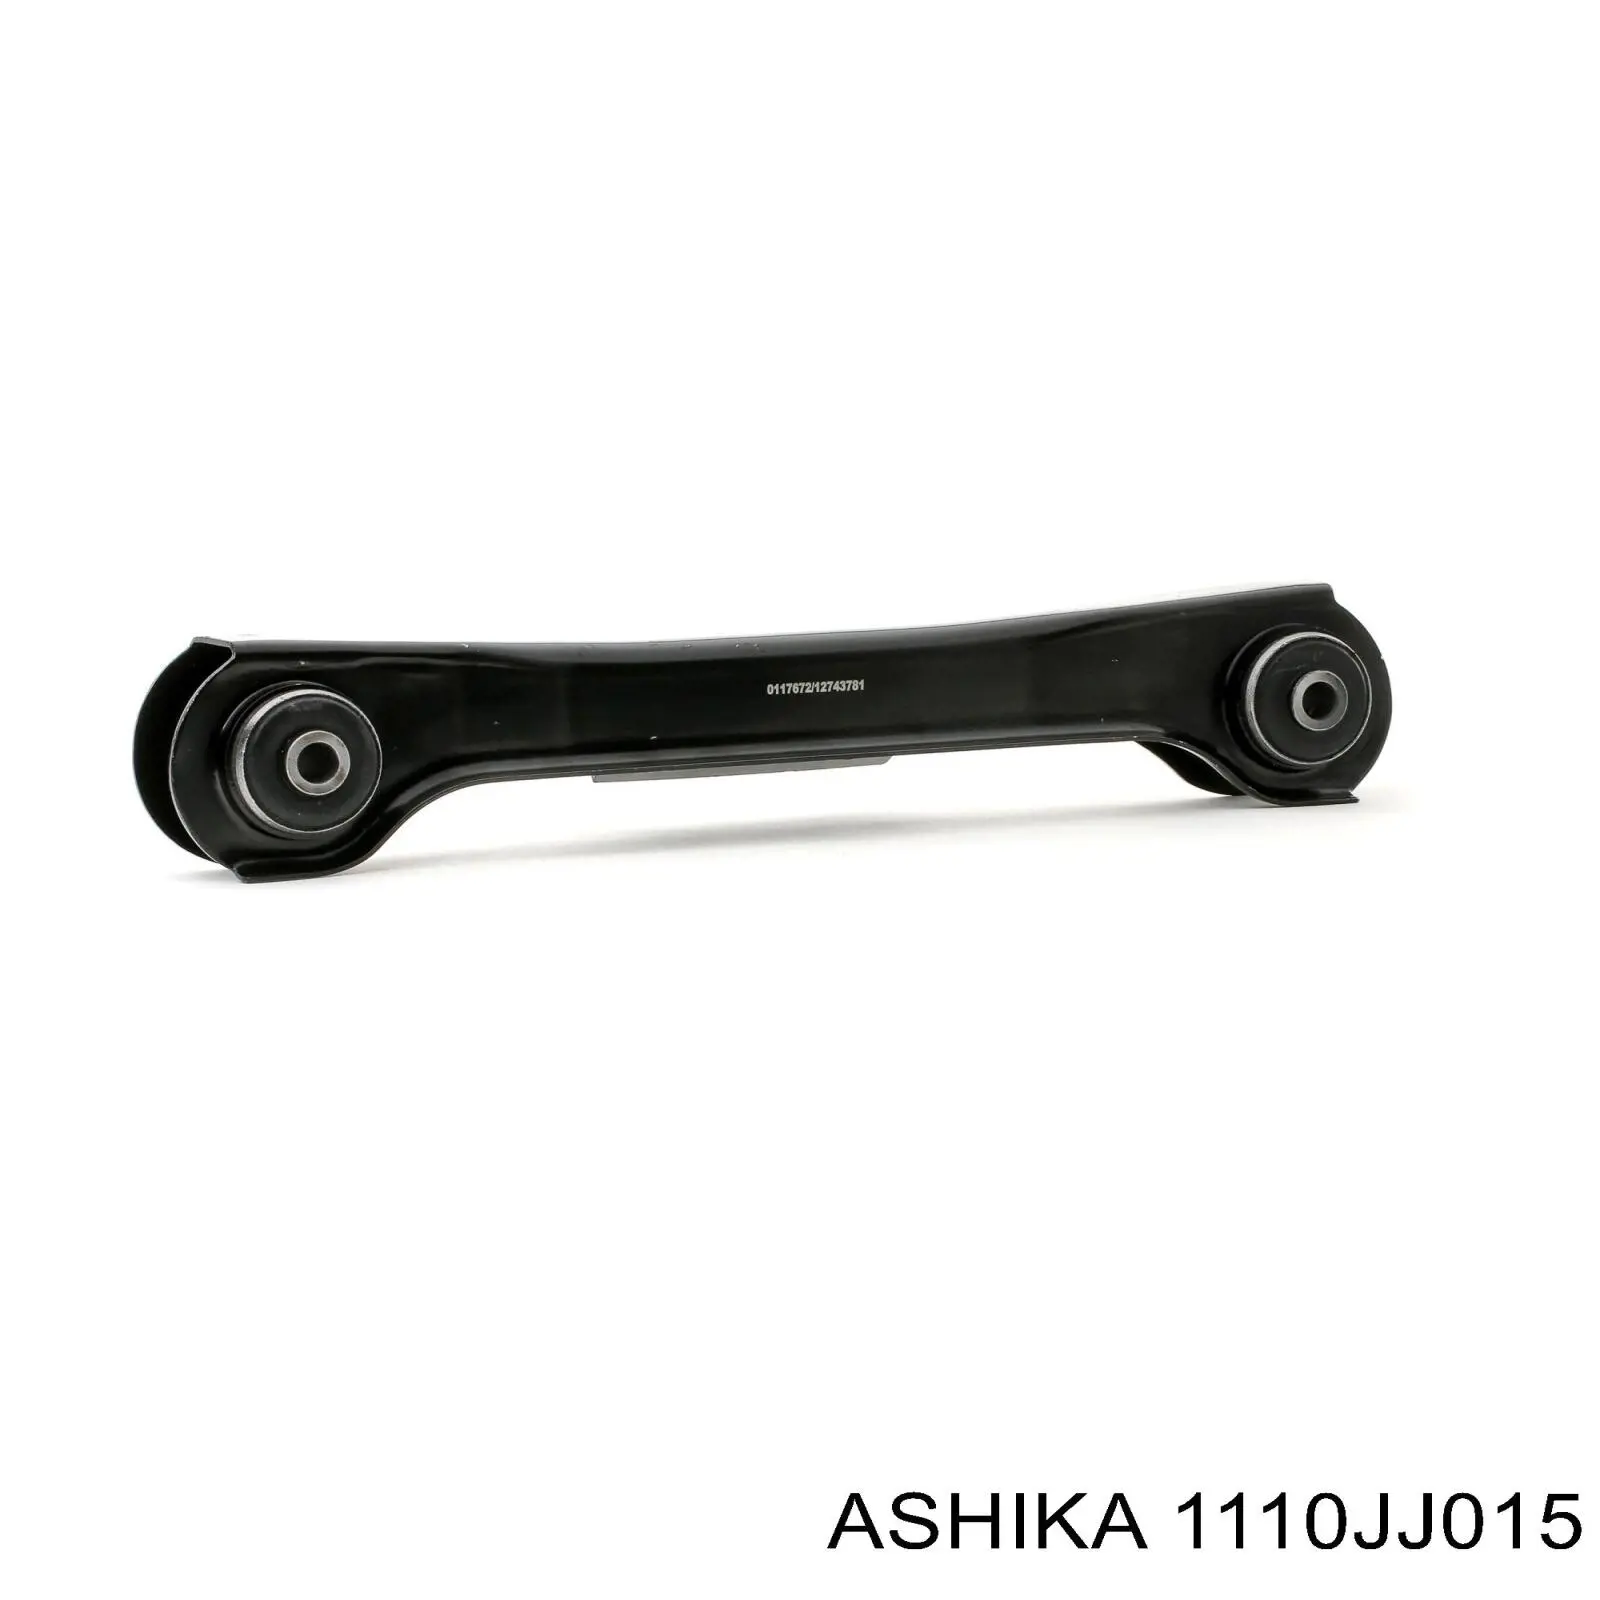 111-0J-J015 Ashika palanca de soporte suspension trasera longitudinal superior izquierda/derecha